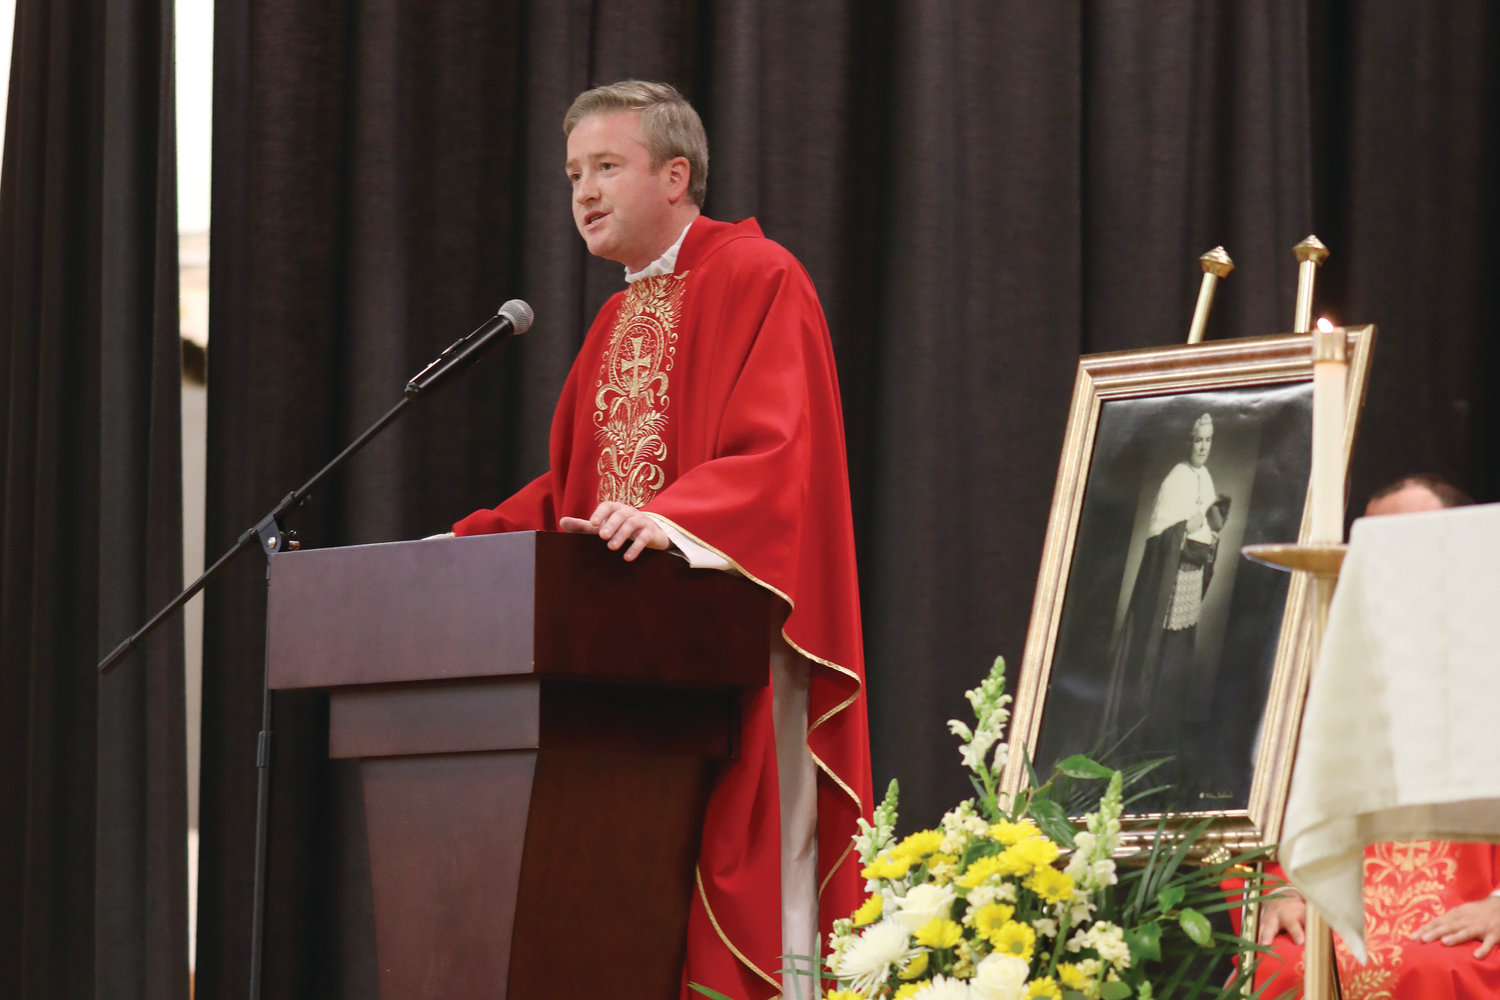 Former Hendricken teacher, Father Timothy Deely served as homilist.